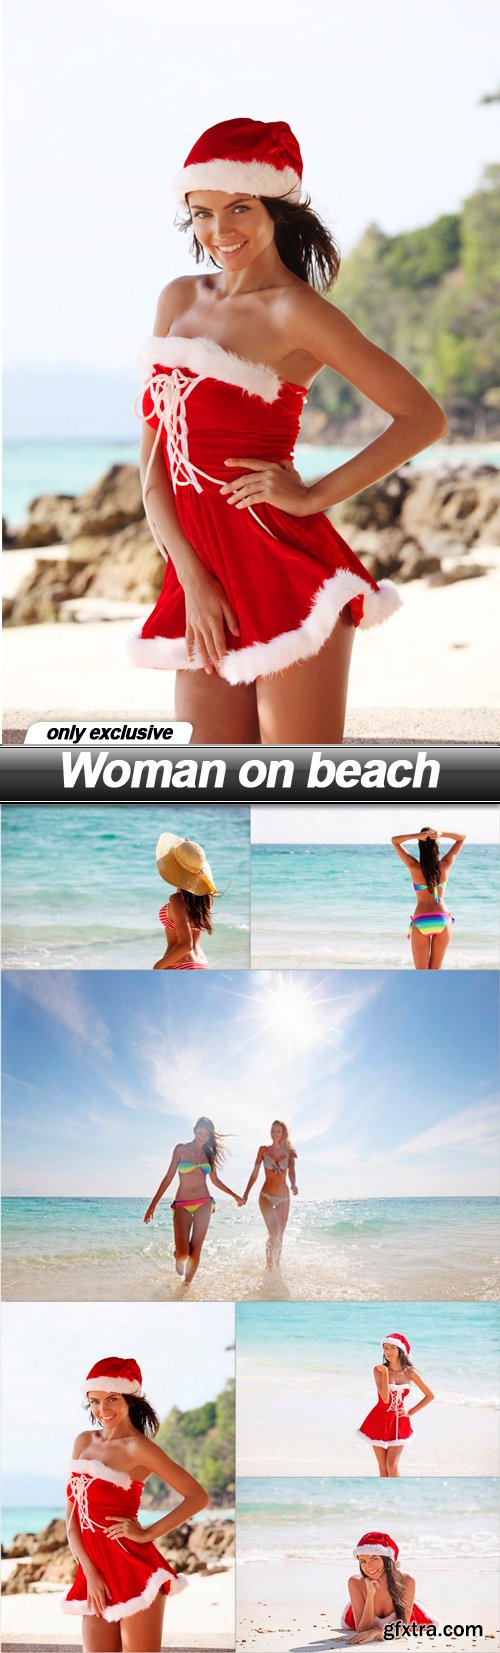 Woman on beach - 6 UHQ JPEG